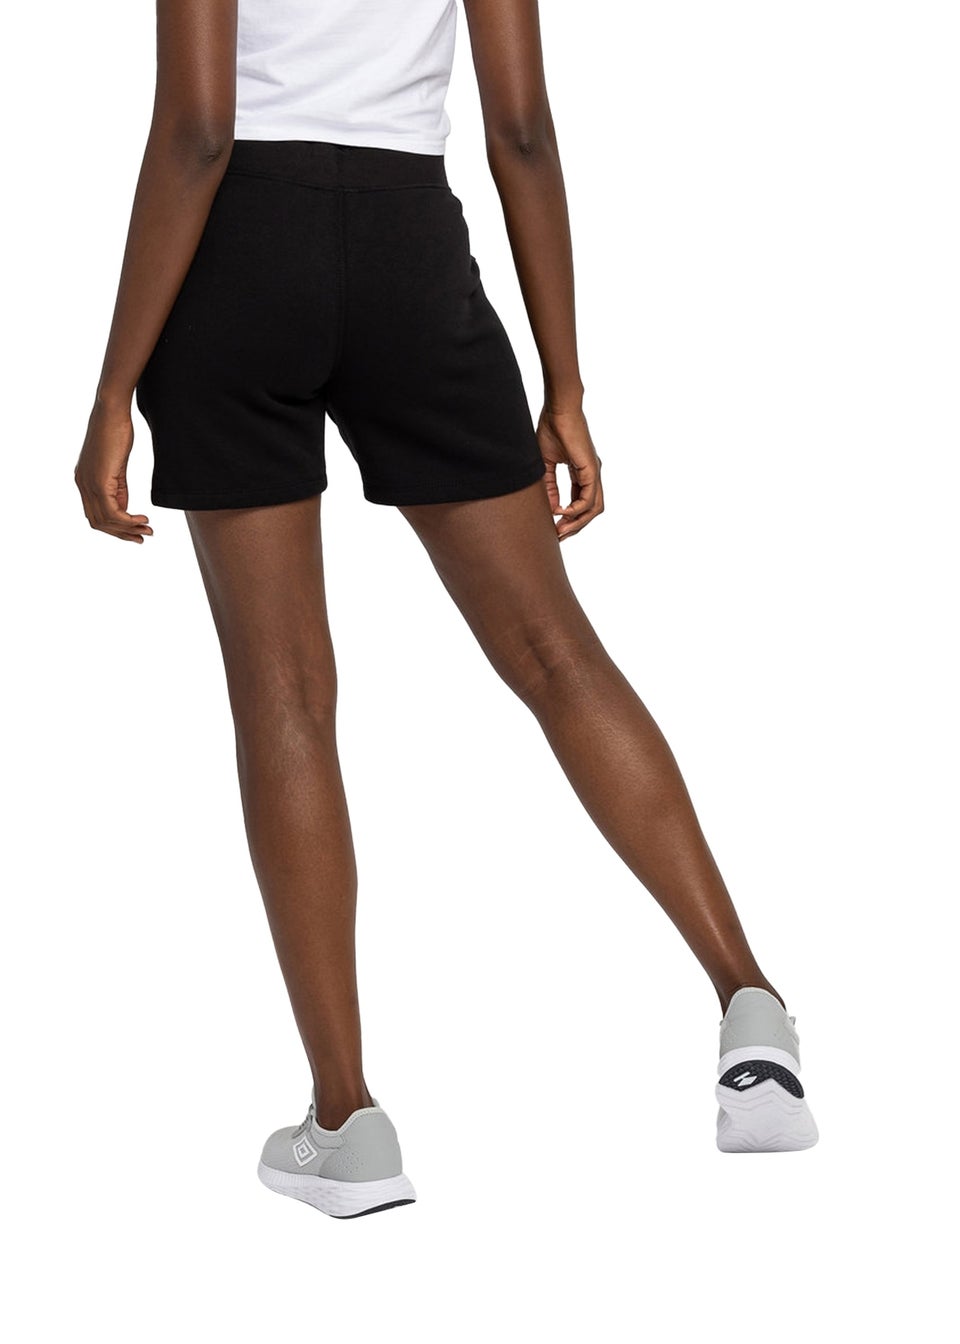 Umbro Black Pro Elite Fleece Shorts